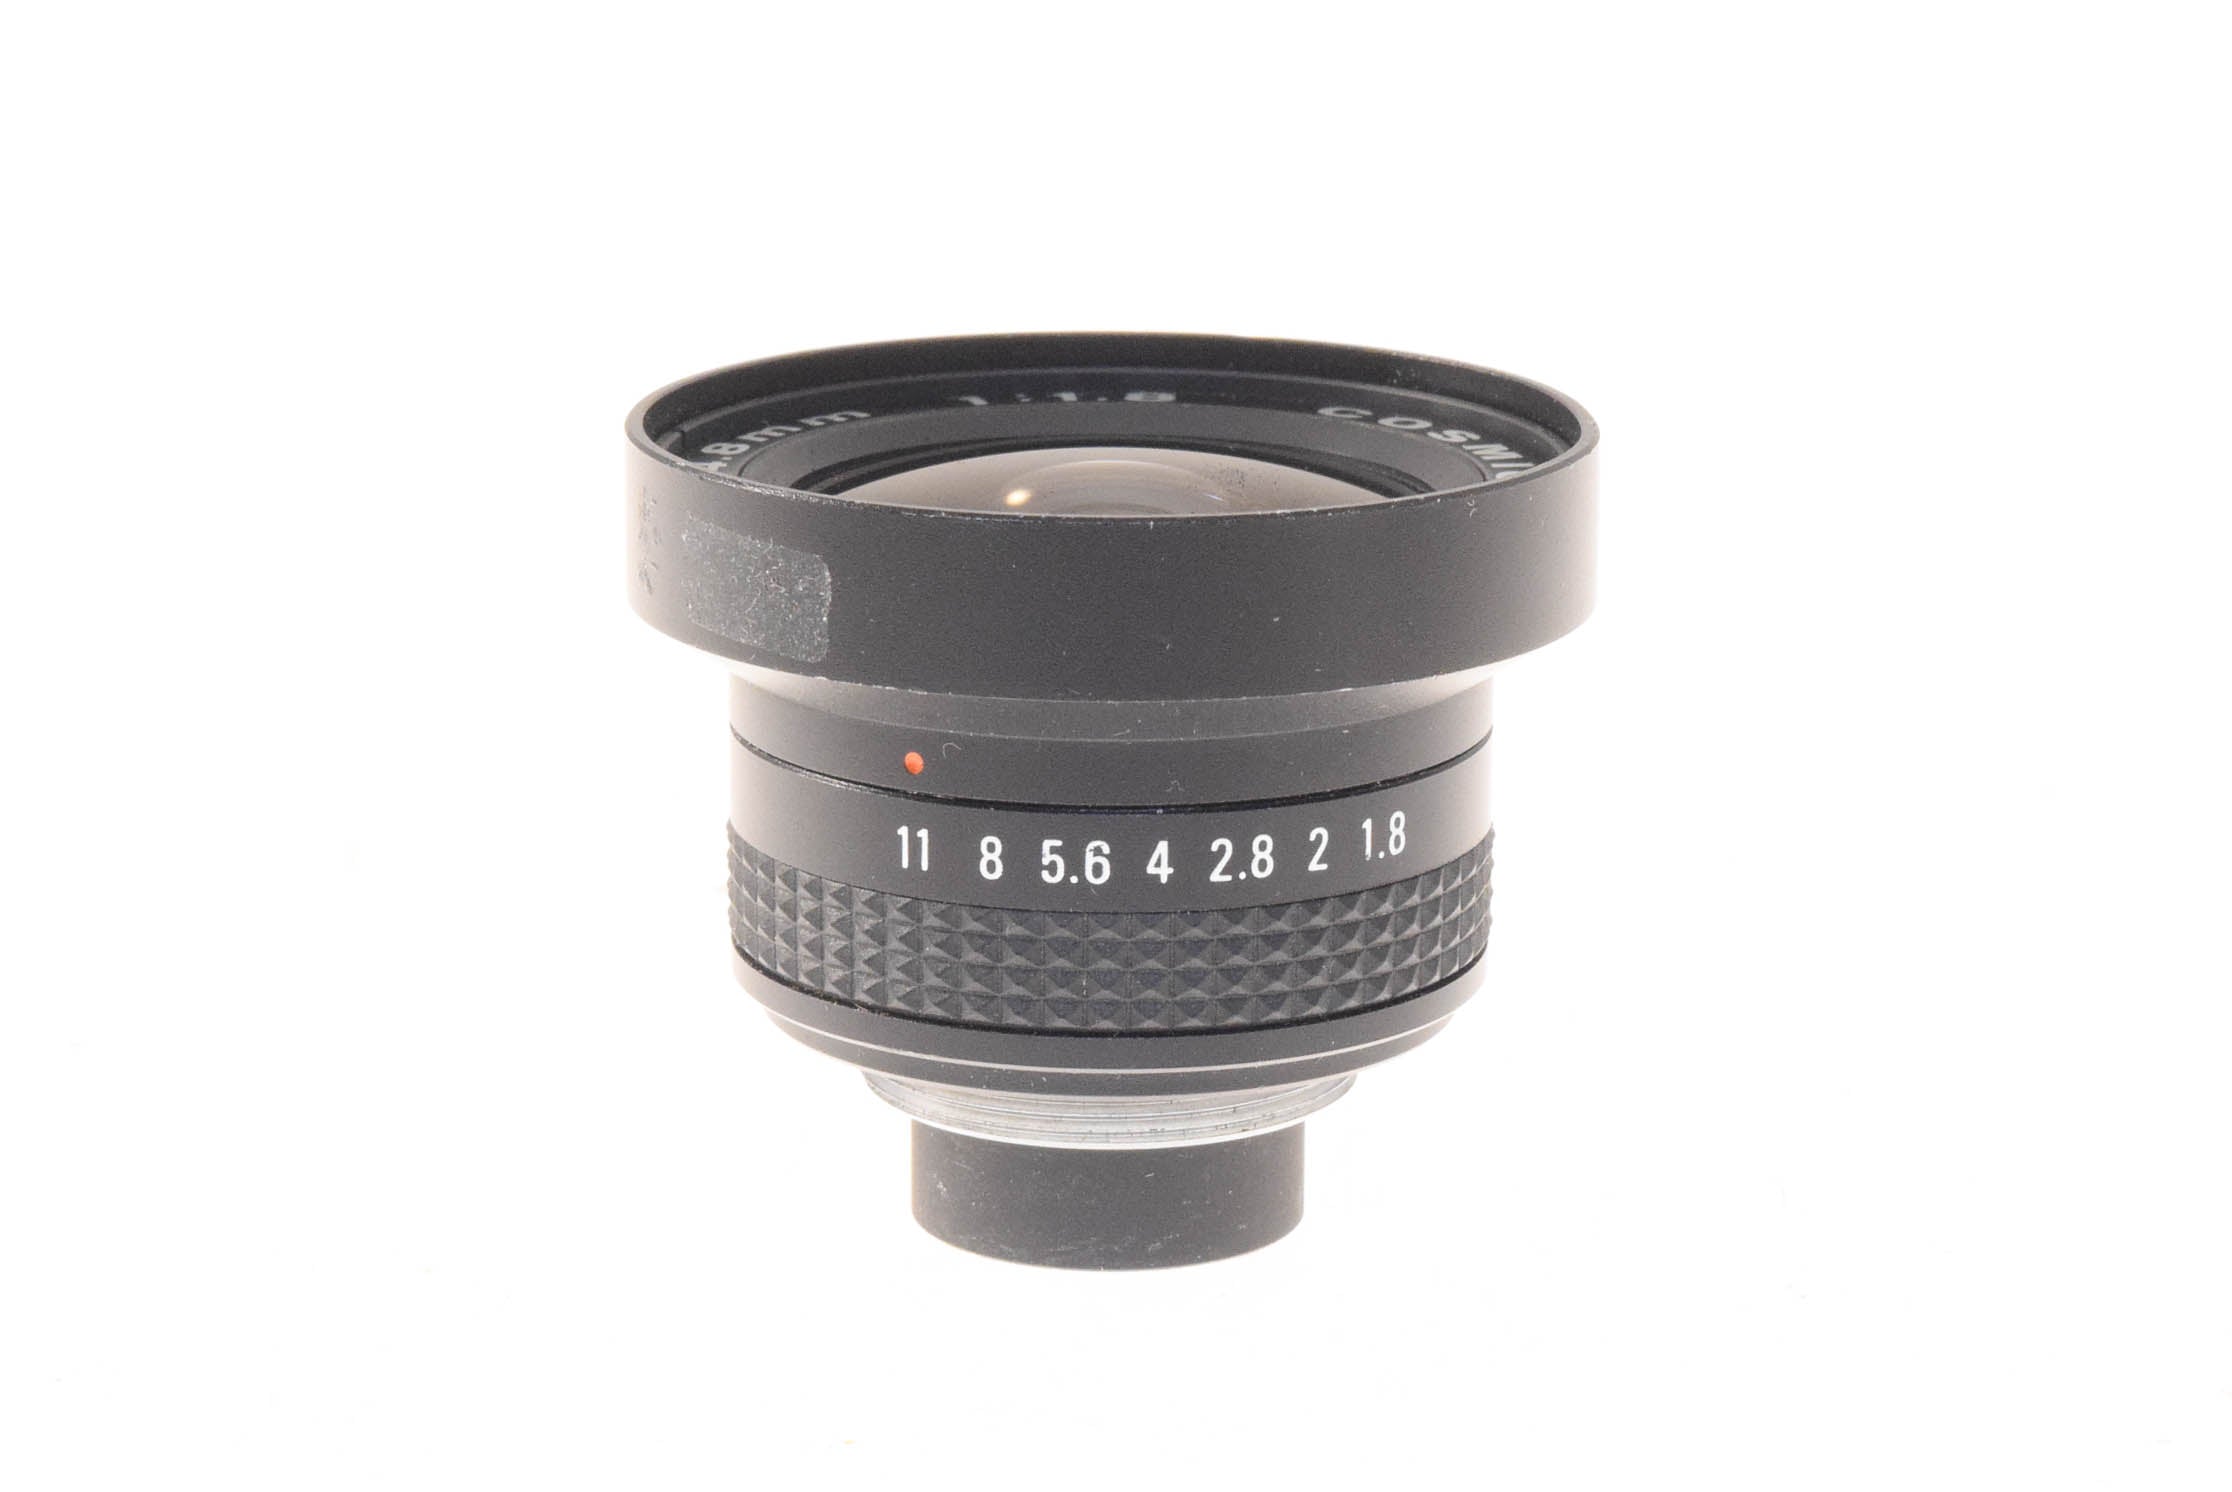 Cosmicar 4.8mm f1.8 TV Lens